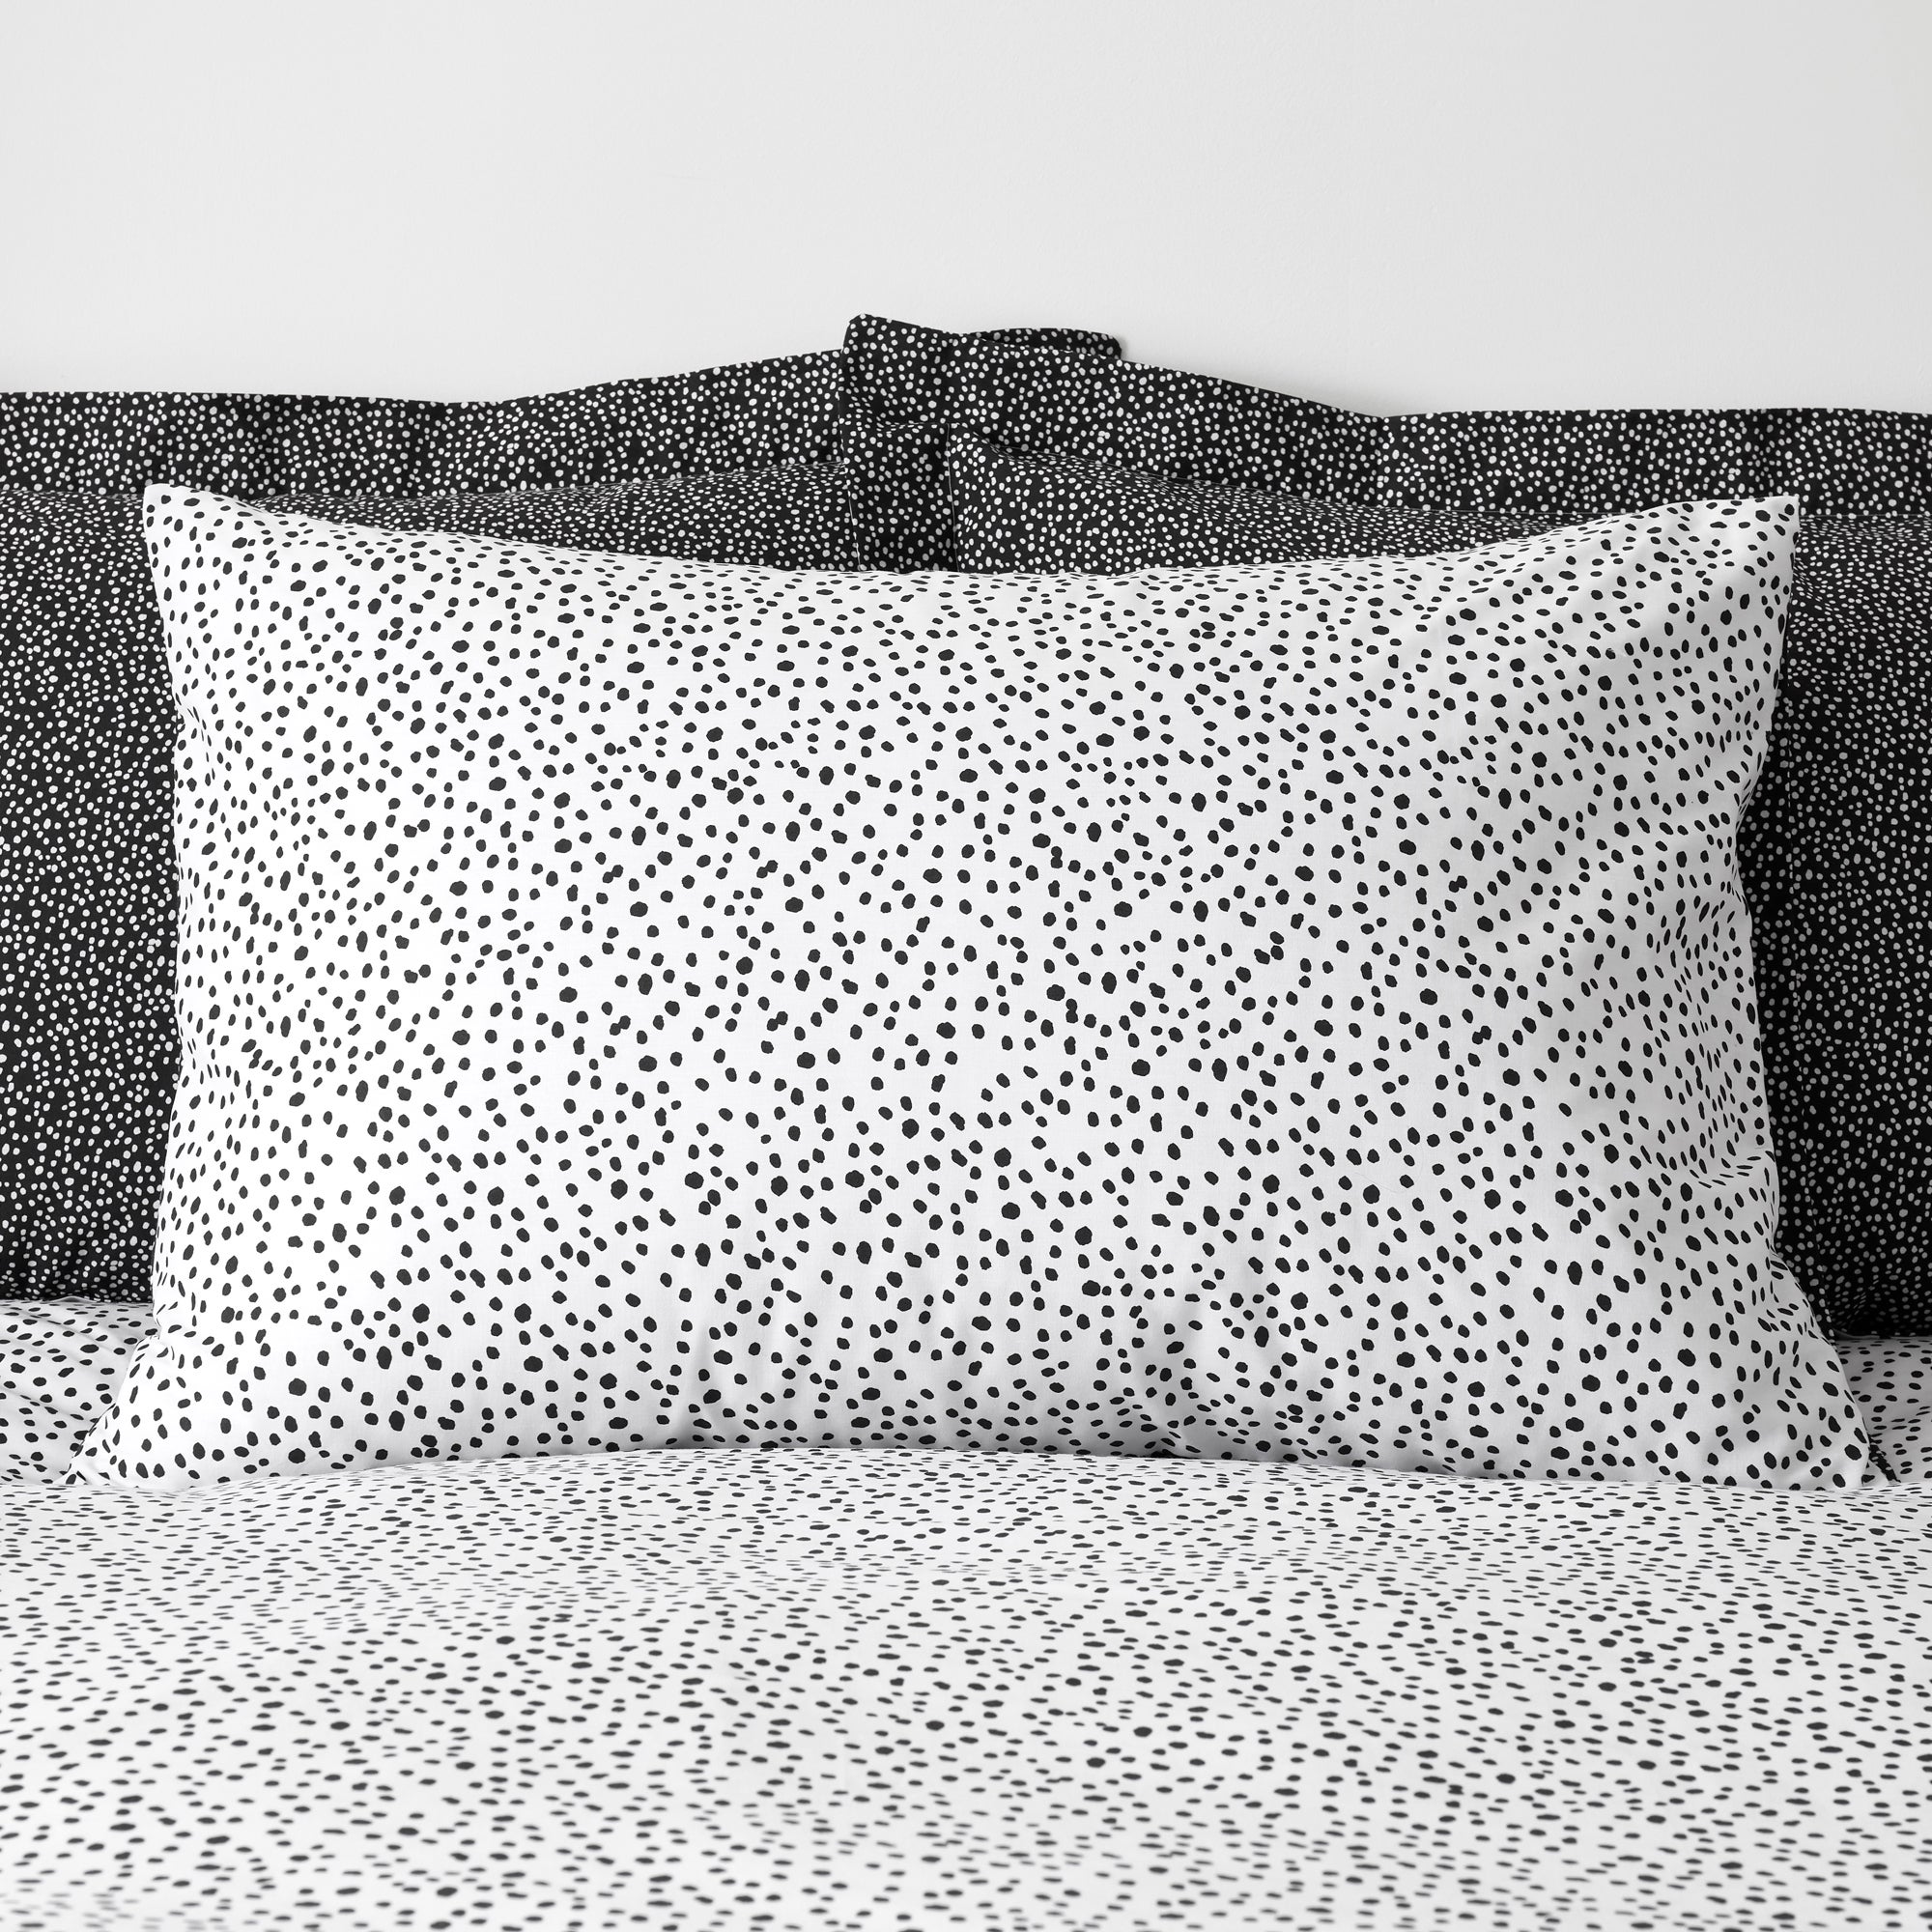 Dottie Black and White Duvet Cover and Pillowcase Set | Dunelm